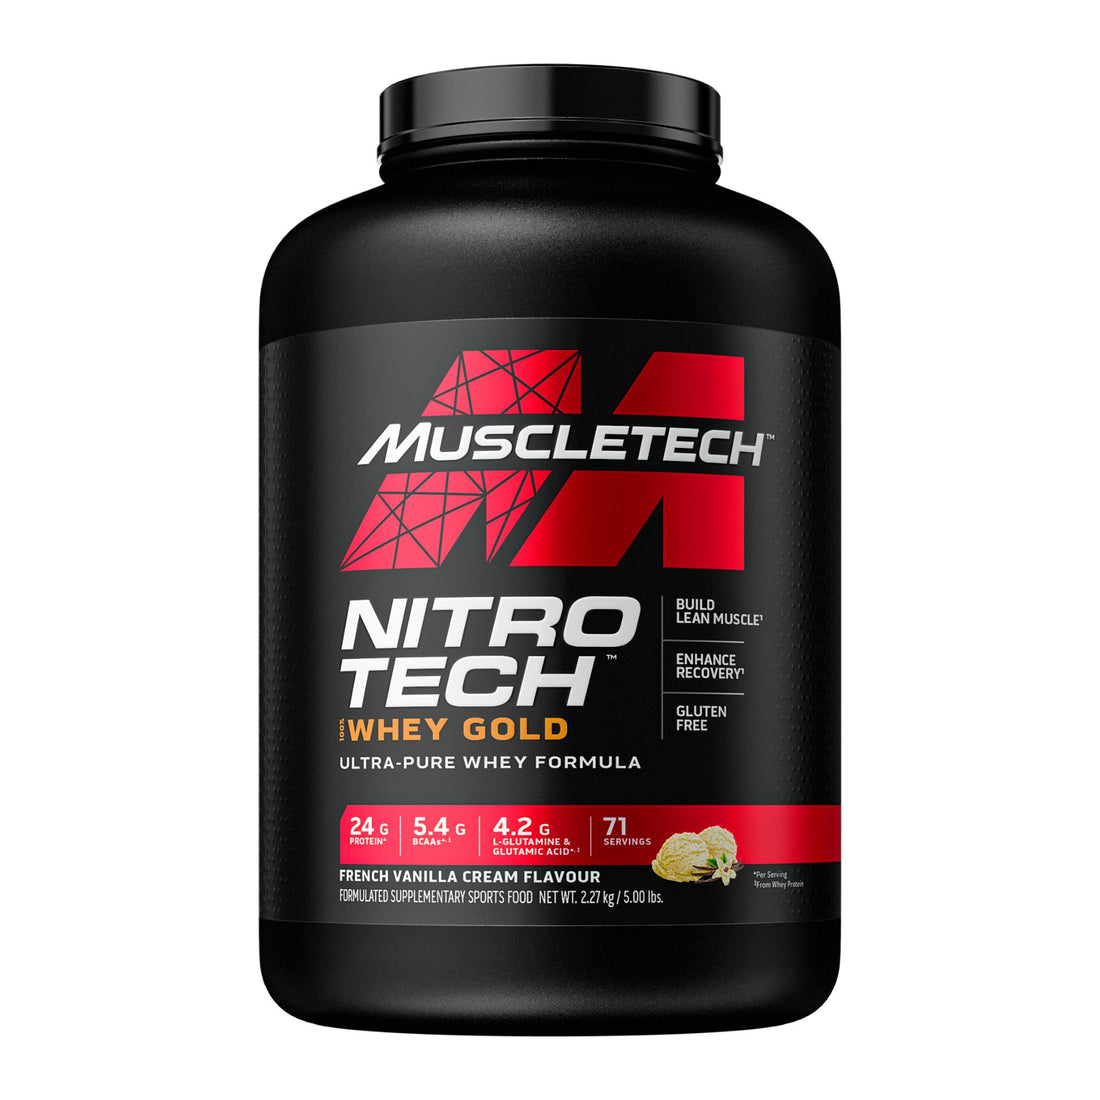 Muscletech Nitro Tech Whey Gold Protein Powder